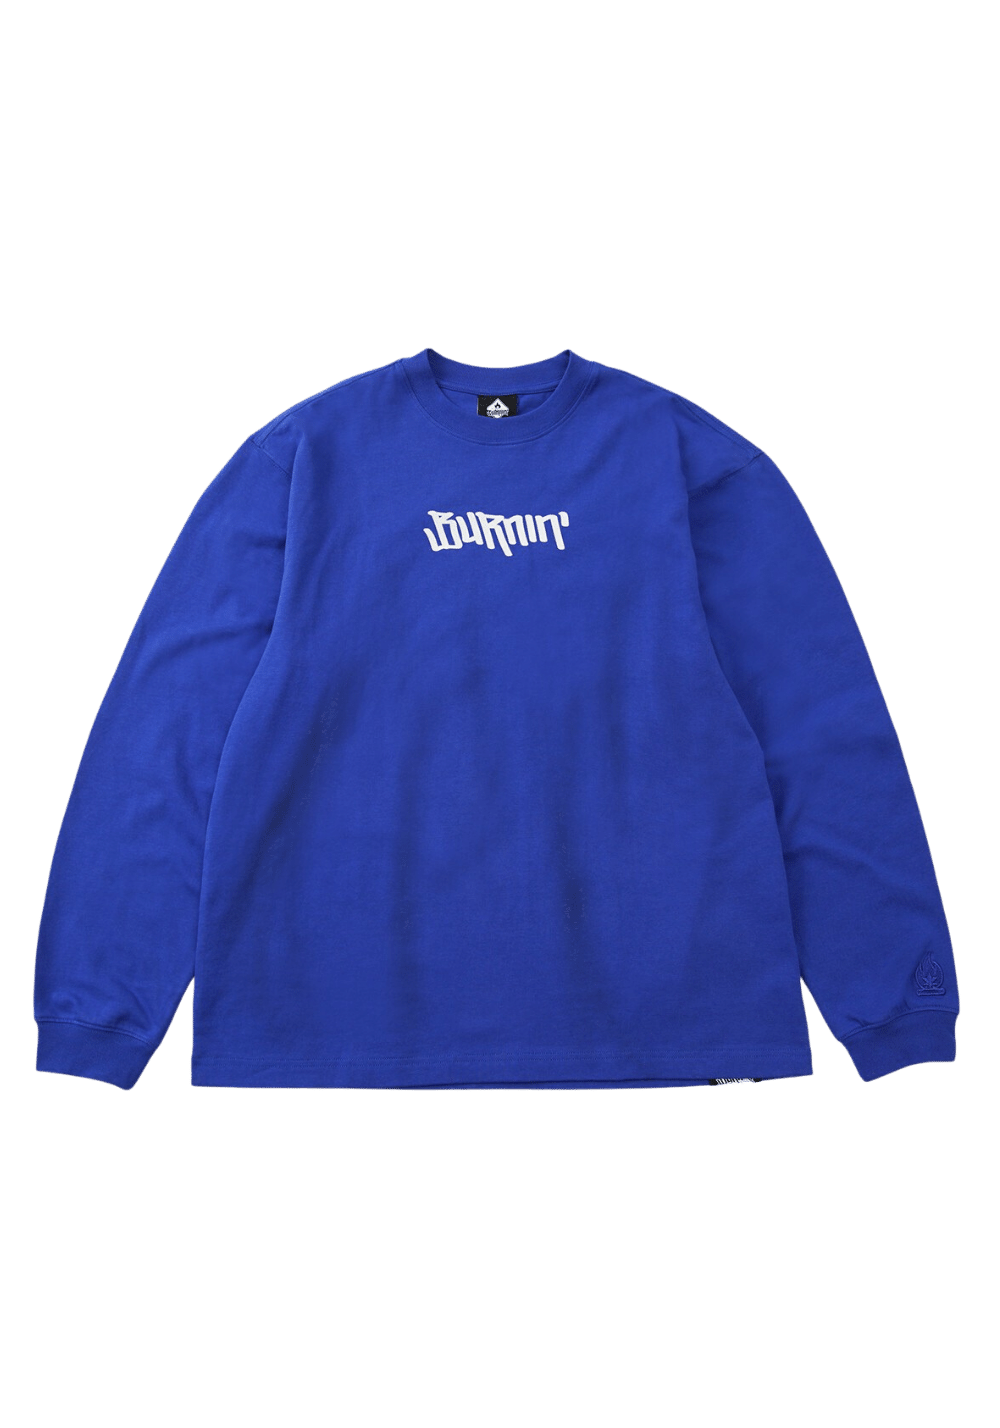 Horizontal Logo Sweatshirt-Blue - PSYLOS 1, Horizontal Logo Sweatshirt-Blue, Sweatshirts, Burnin, PSYLOS 1